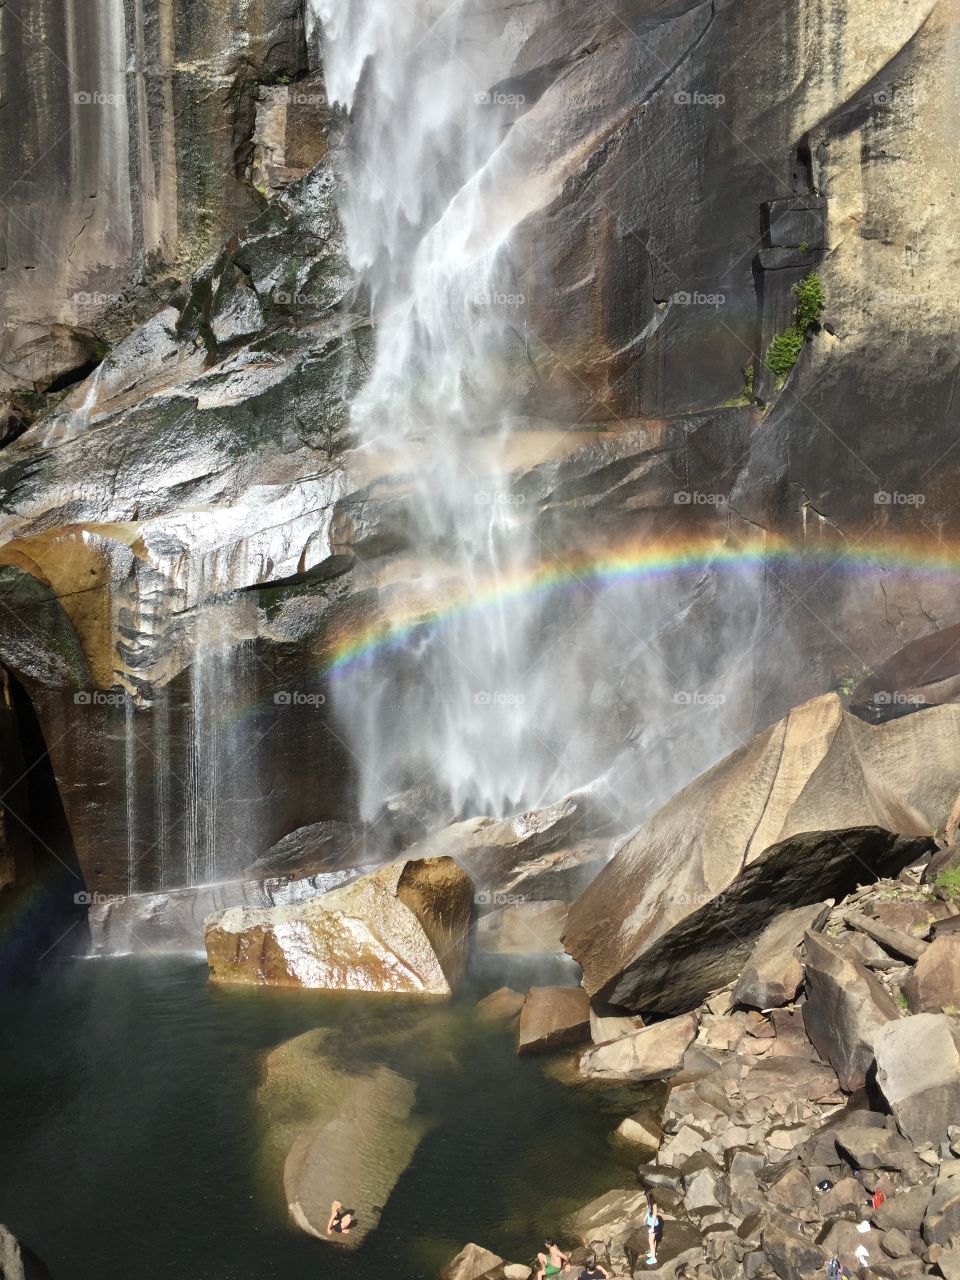 Rainbow in waterfall